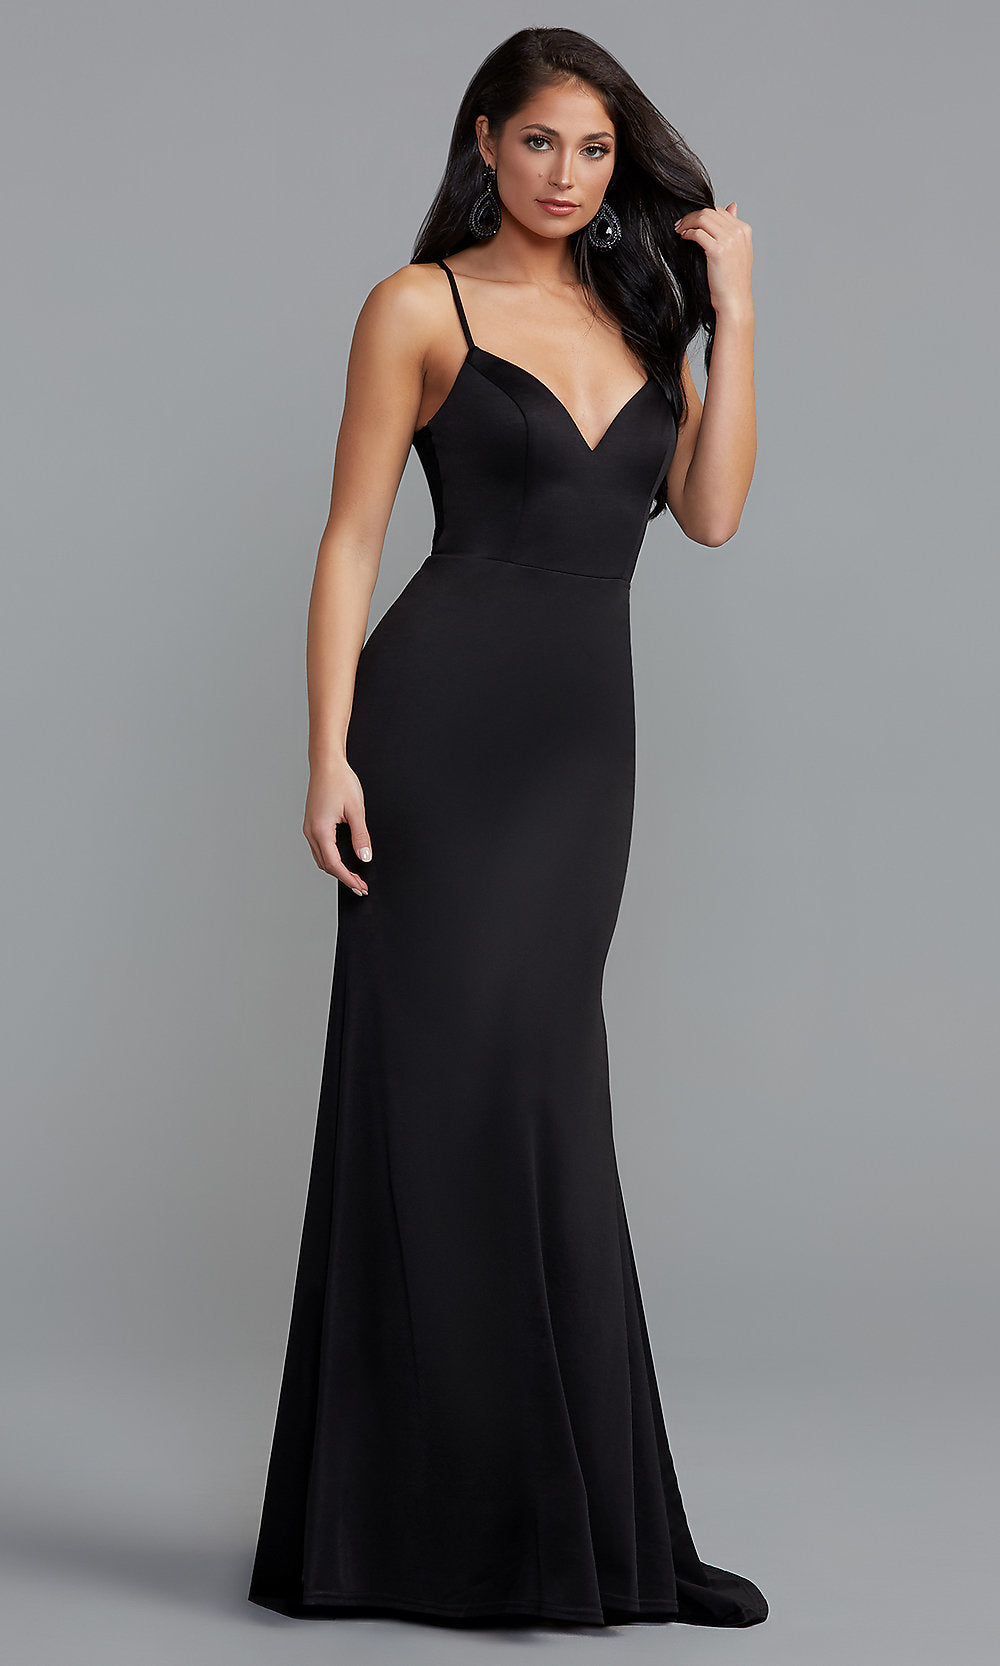 Simple Black Long Evening Dress With Pleated V Neck #AGP18007 - GemGrace.com